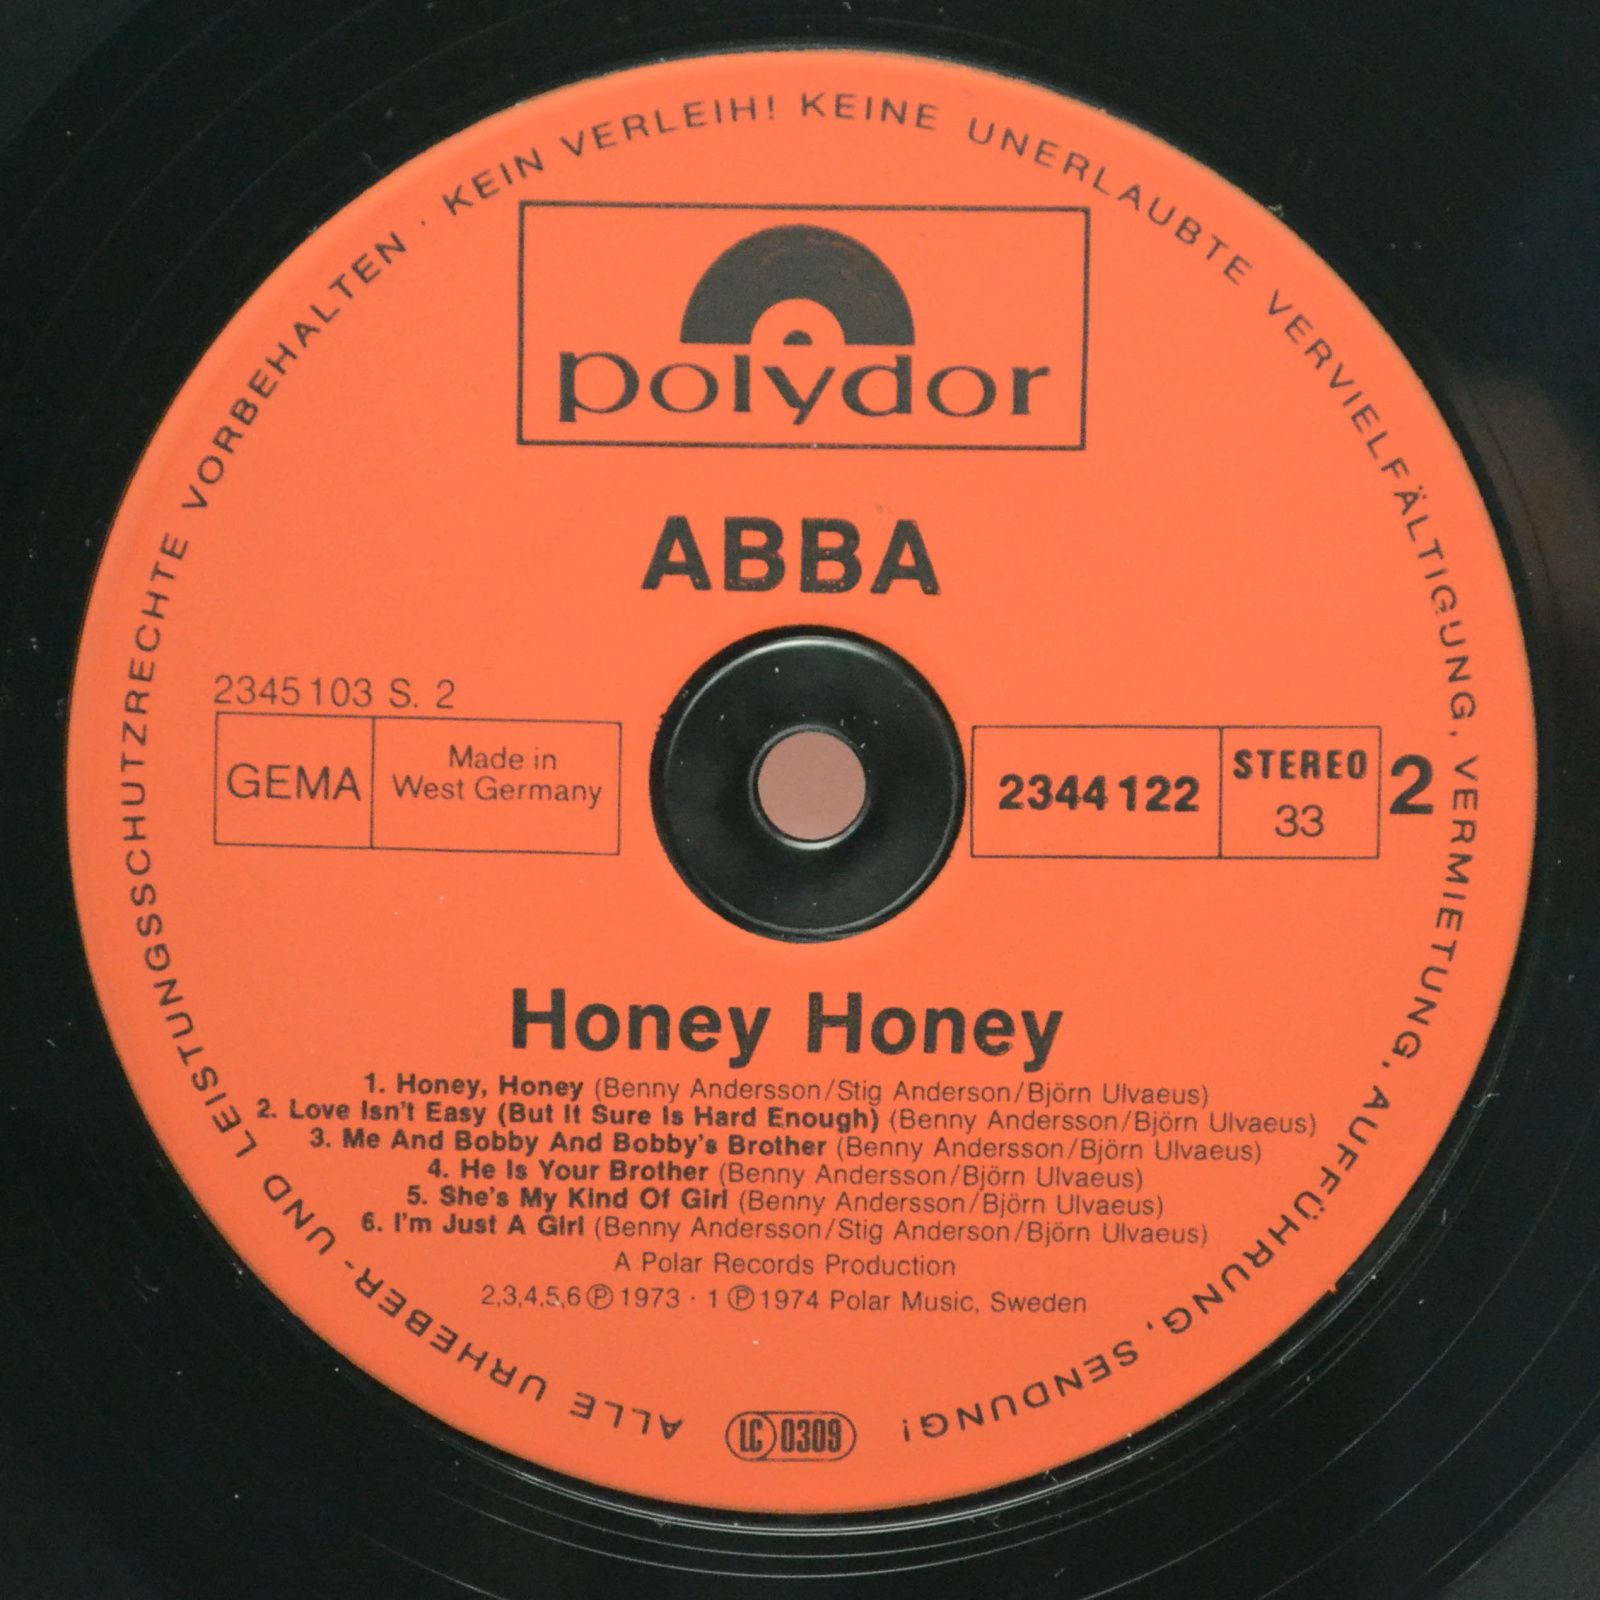 ABBA — Honey, Honey, 1979